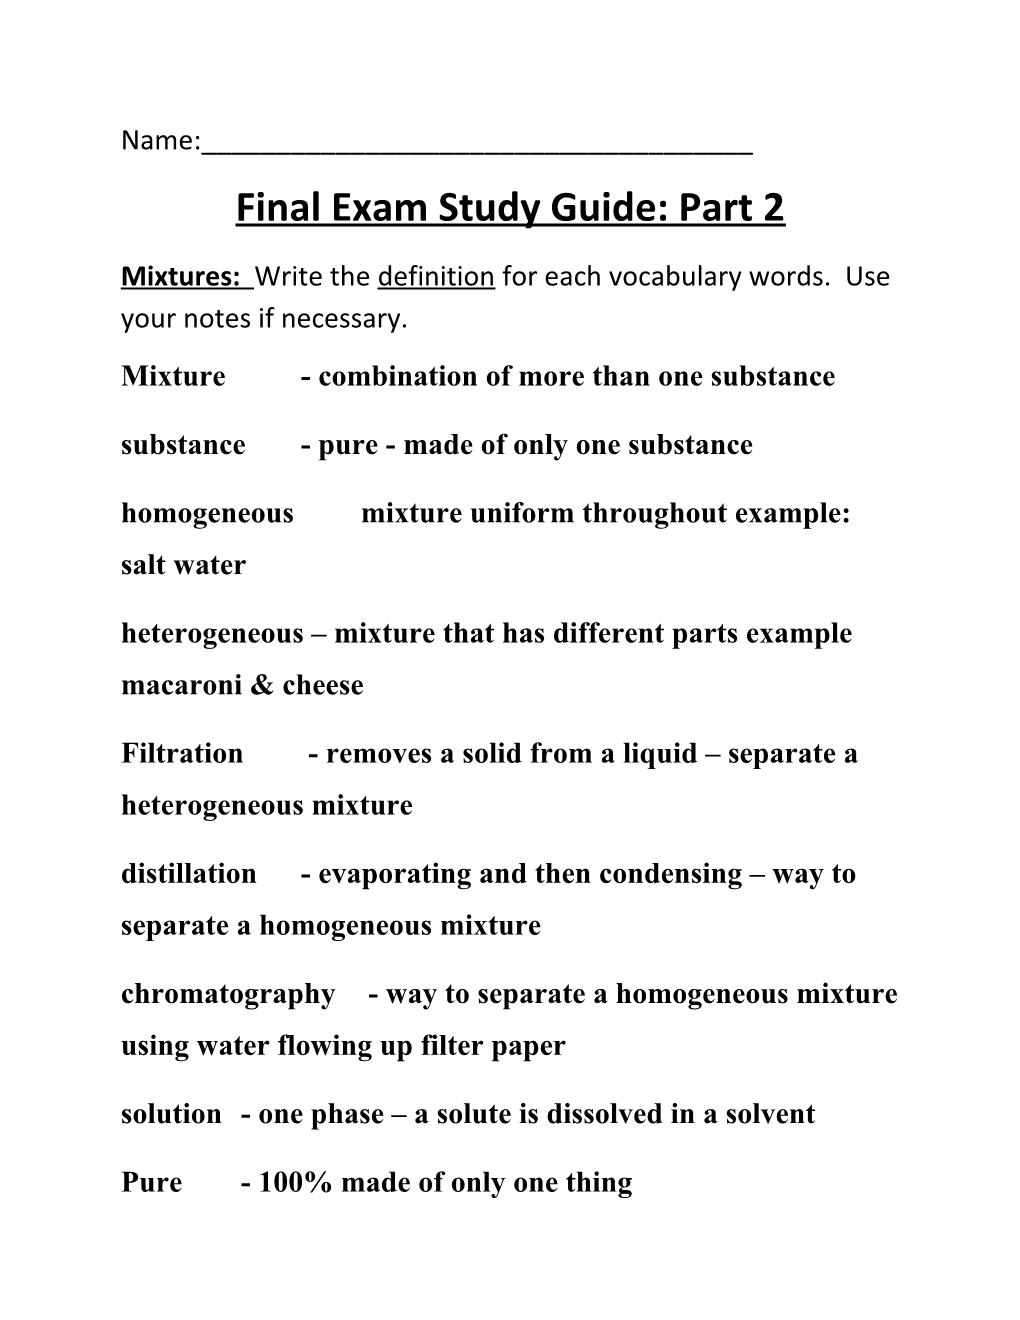 Final Exam Study Guide: Part 2